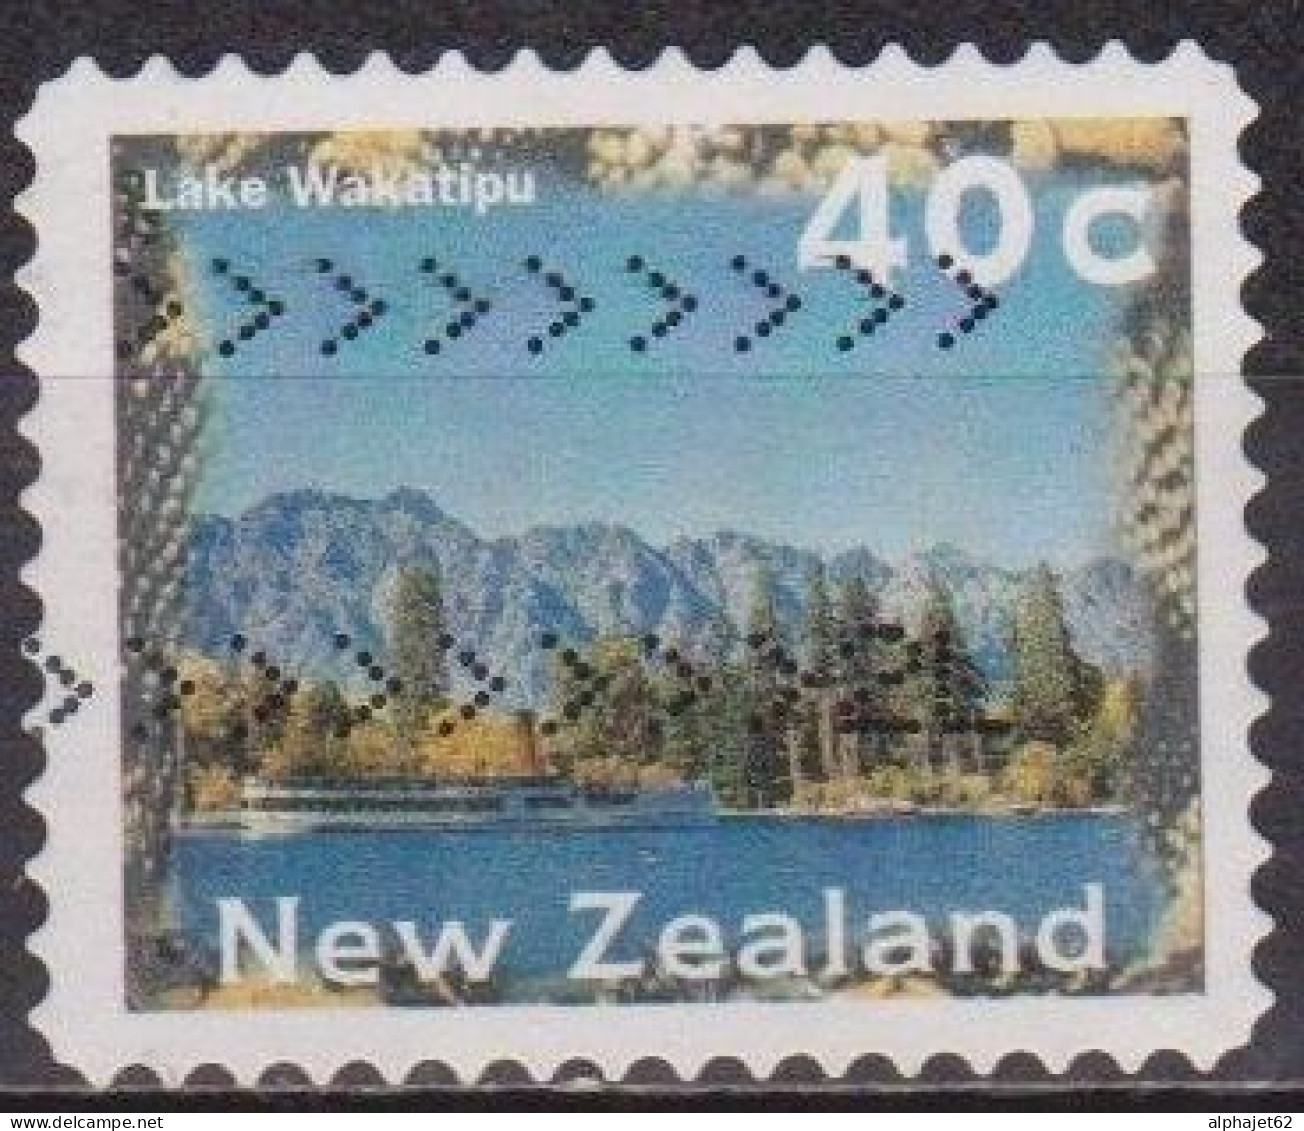 Lake Wakatipu - NOUVELLE ZELANDE - Paysages - N° 1462a - 1996 - Oblitérés